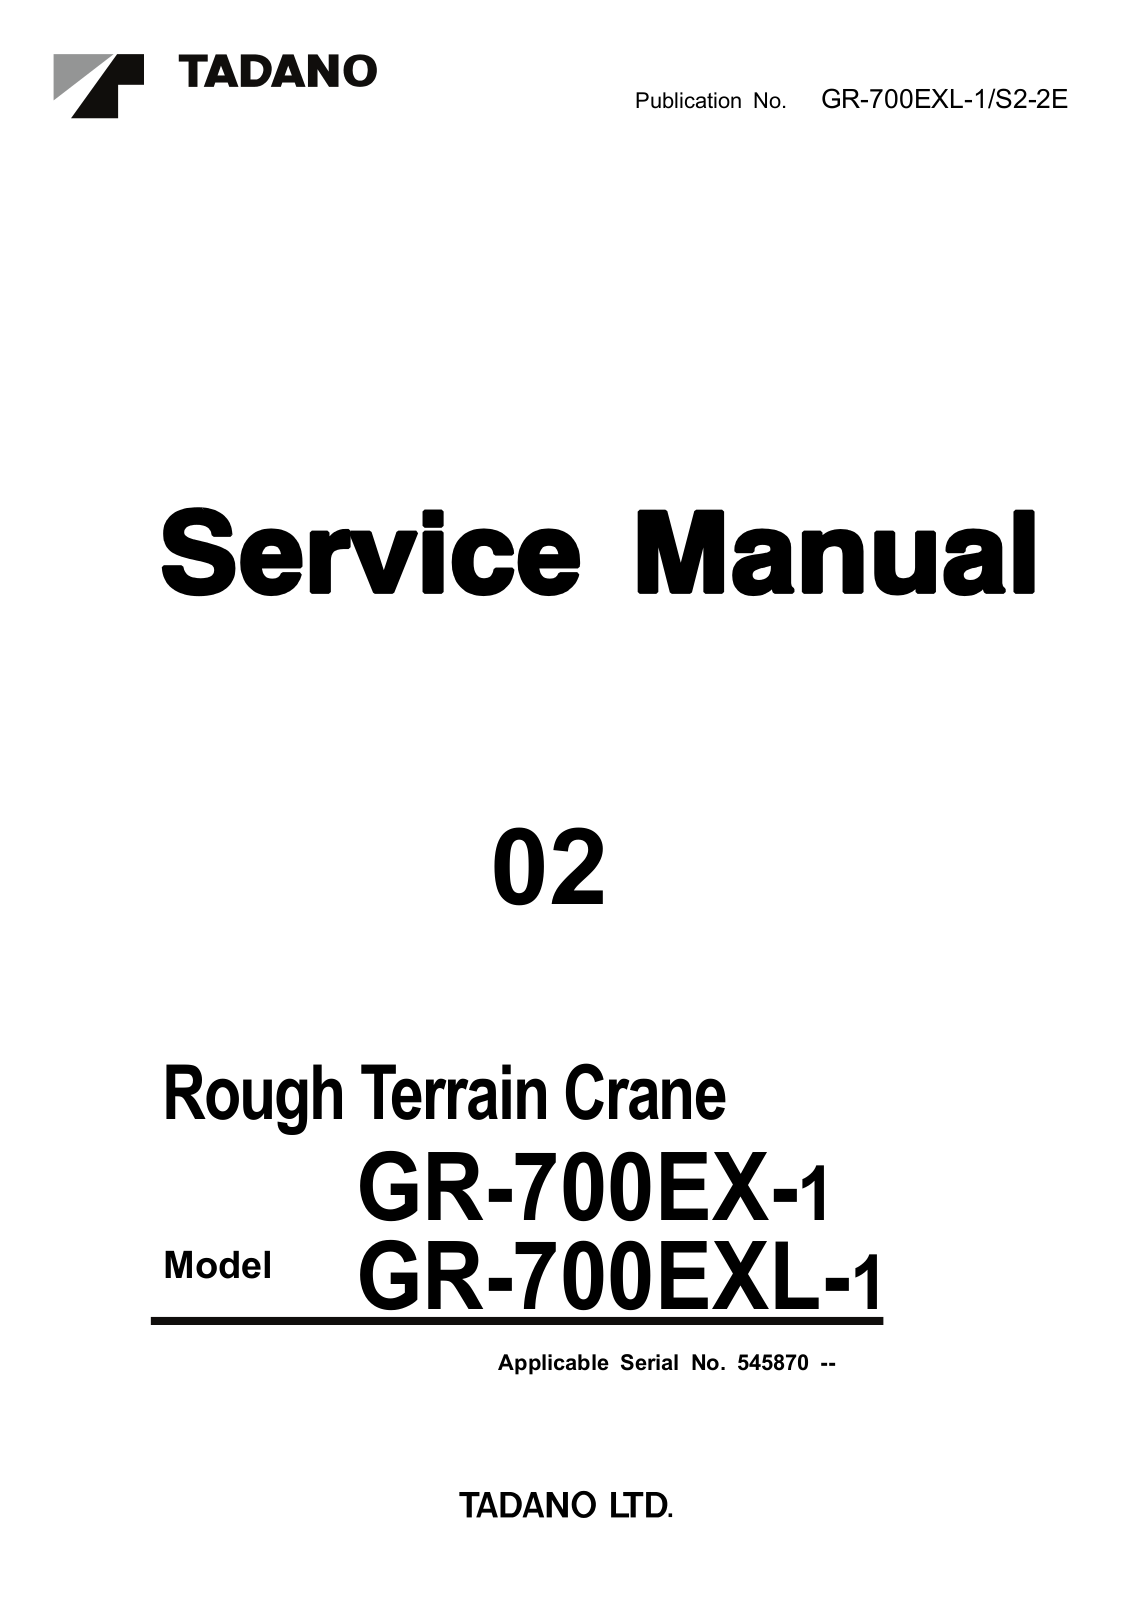 Tadano GR-700EX-1, GR-700EXL-1 Service Manual